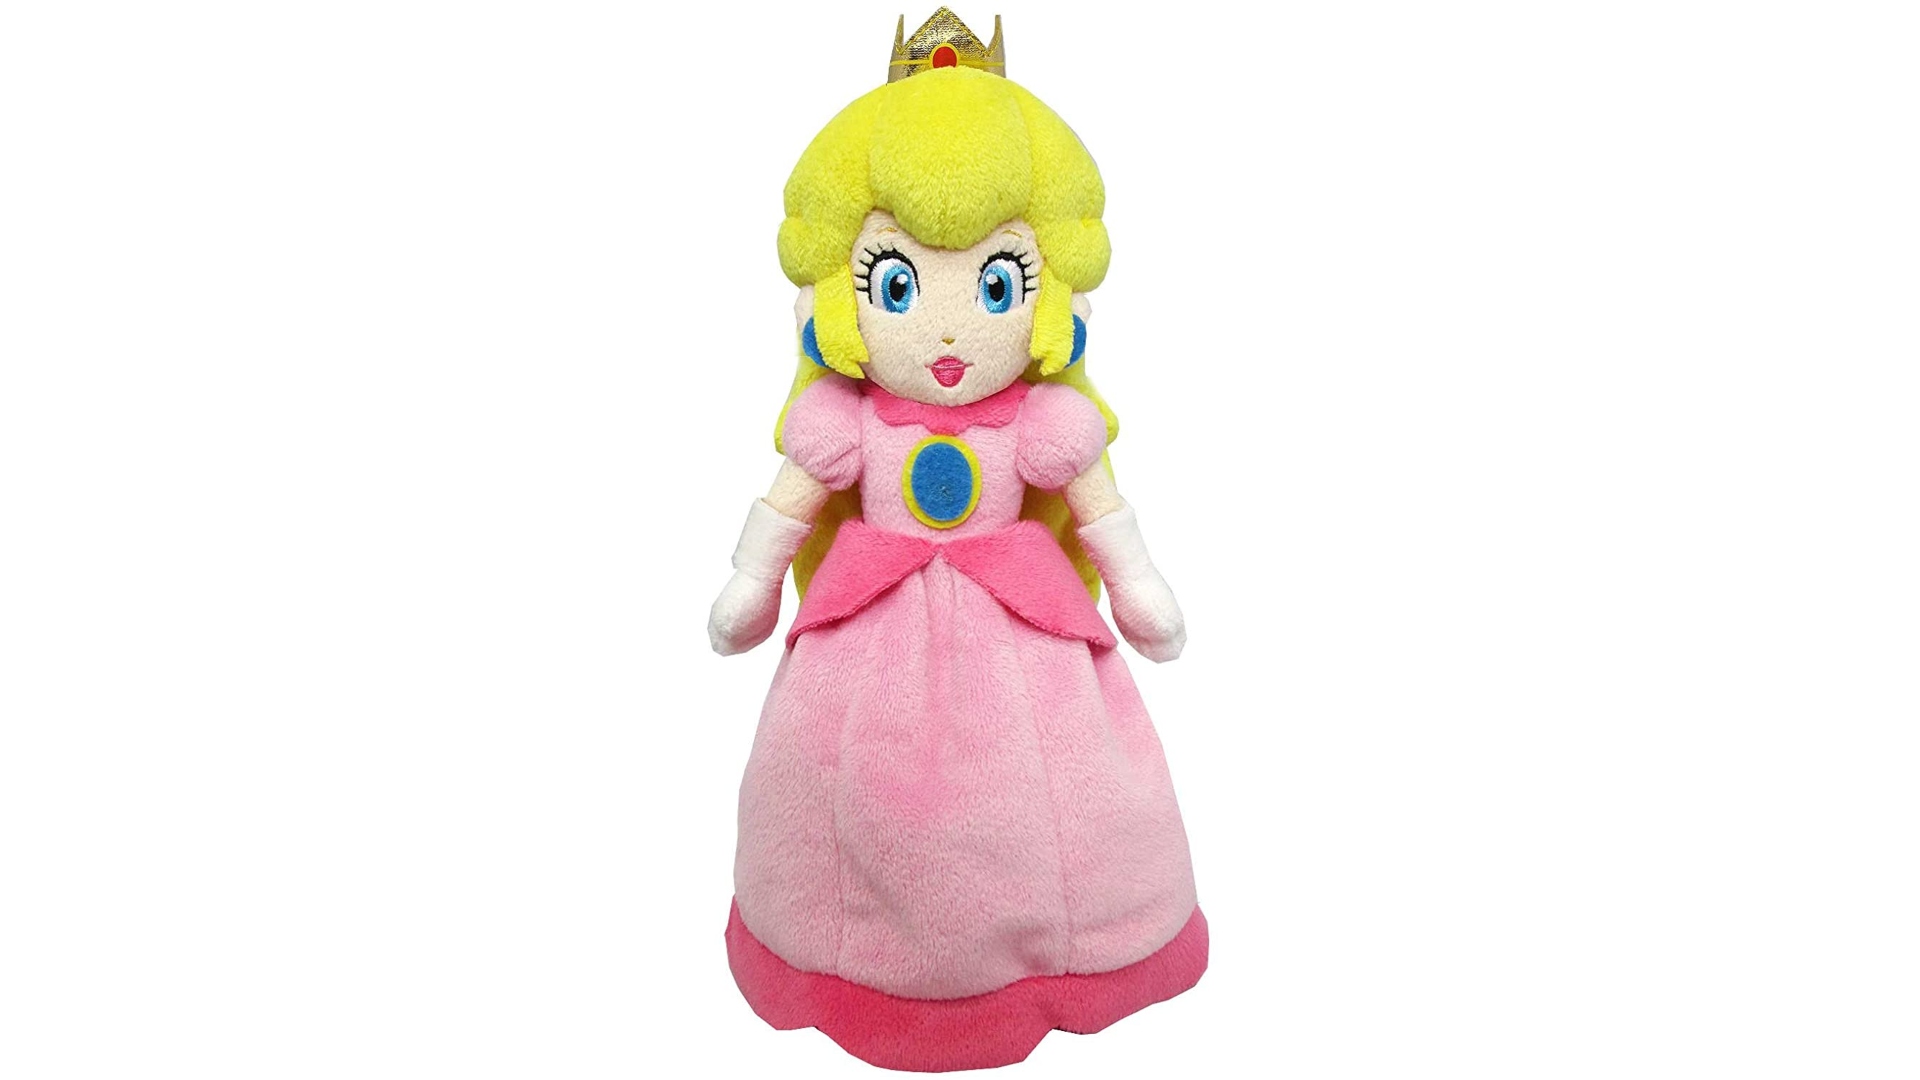 A Princess Peach plush on a white background.